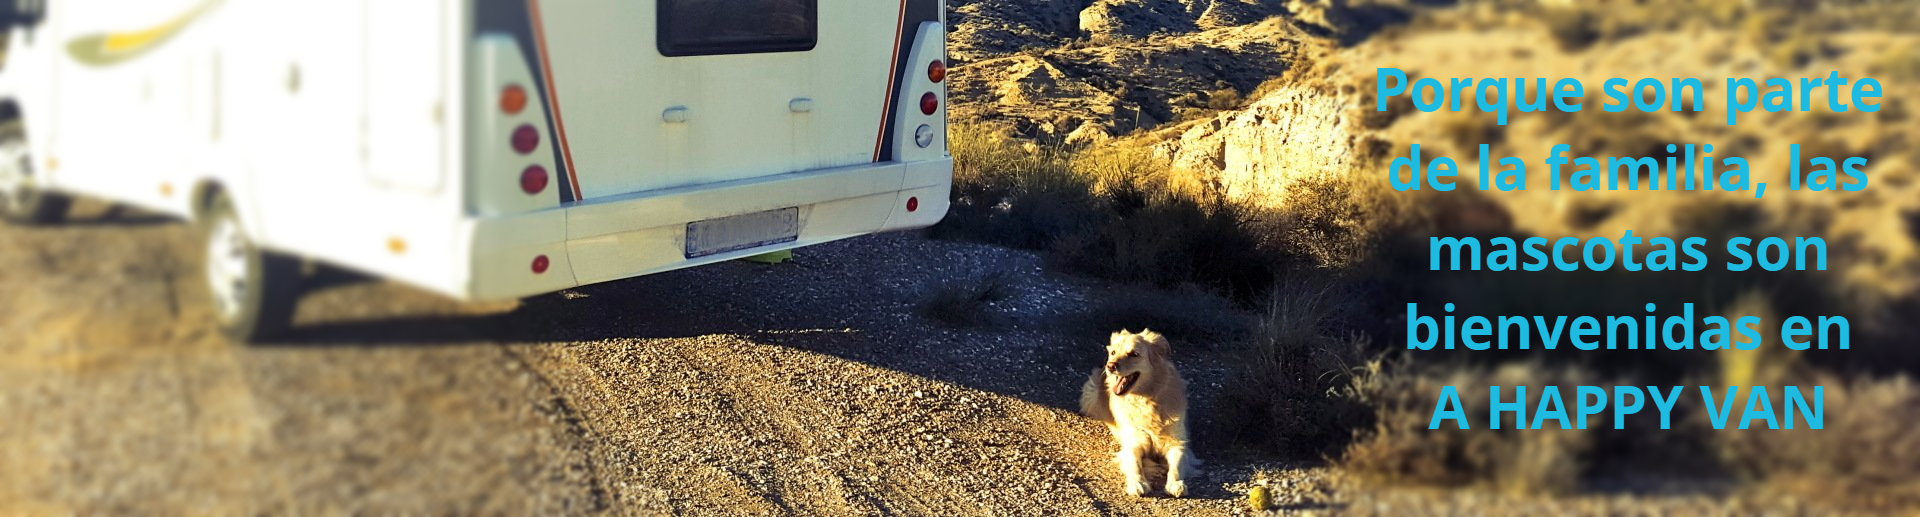 autocaravana y mascotas a happy van